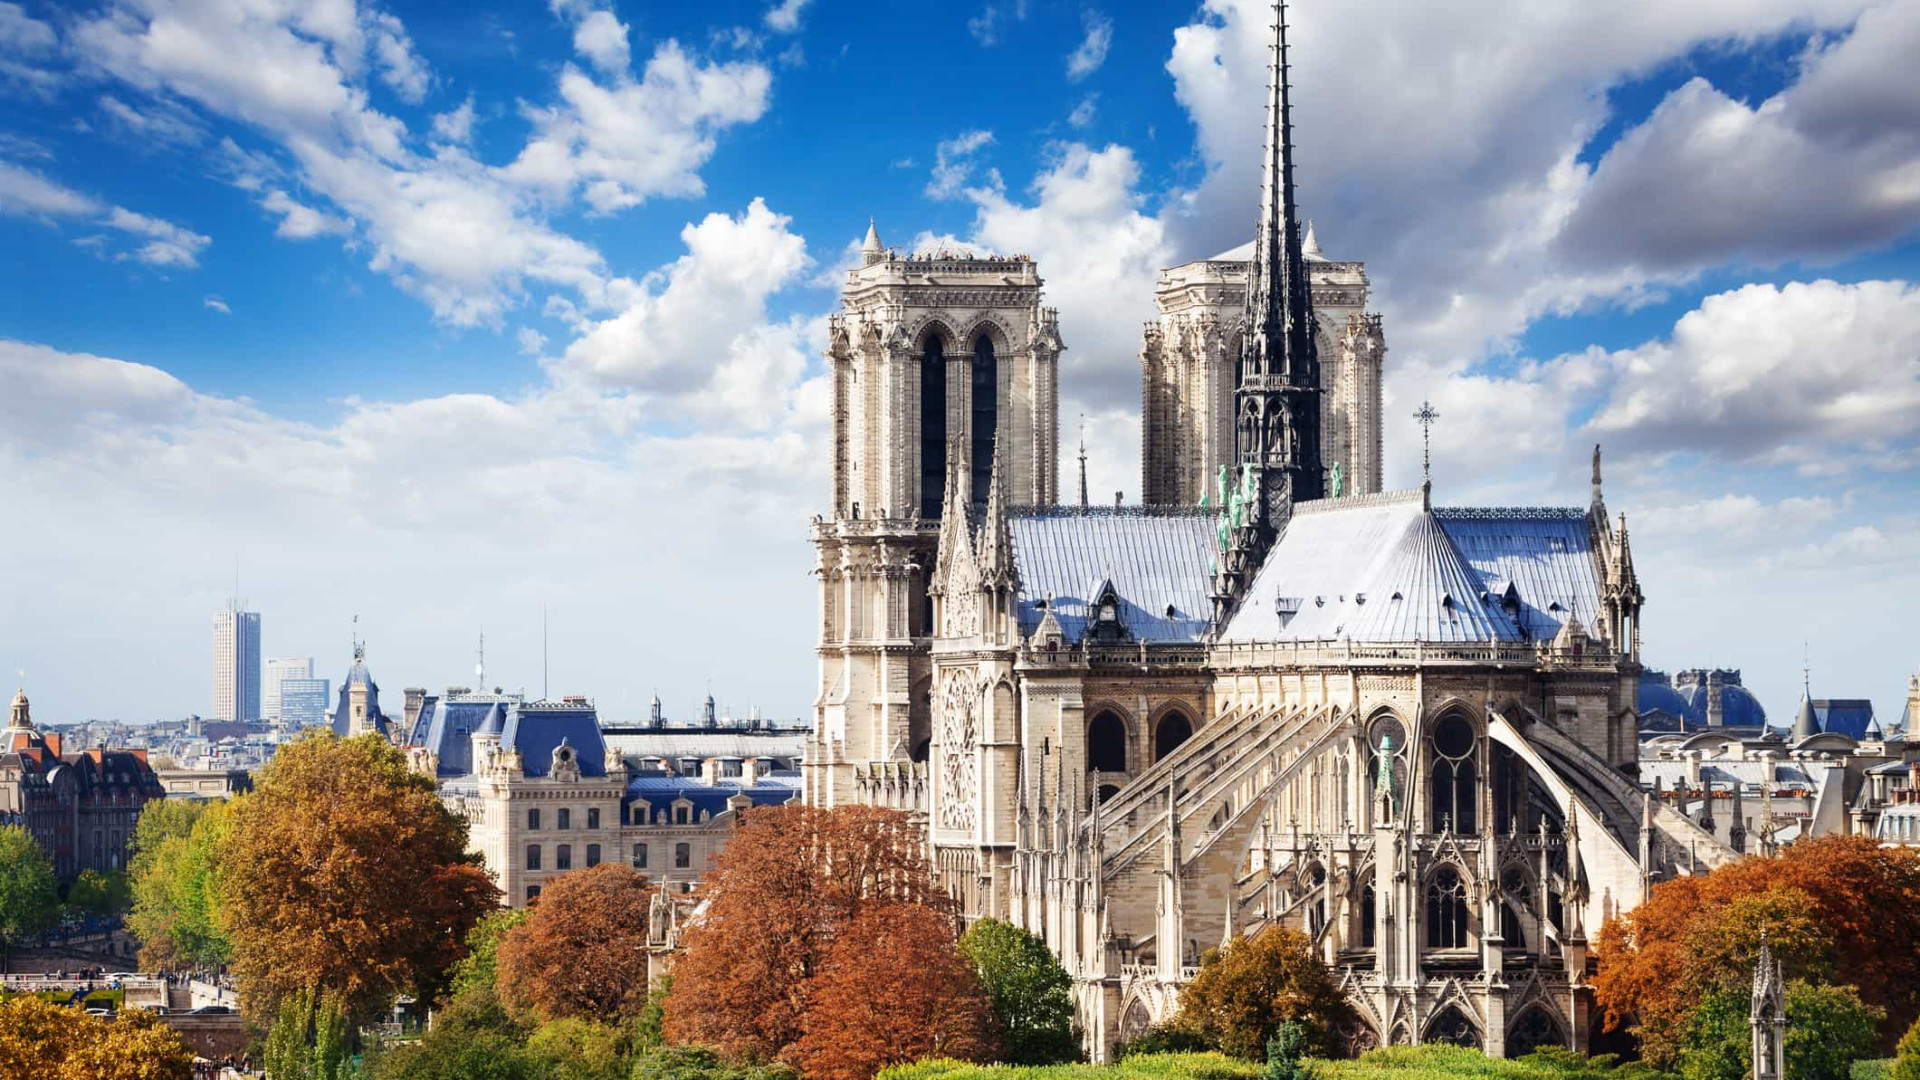 Antes do incêndio: a beleza da Catedral de Notre-Dame